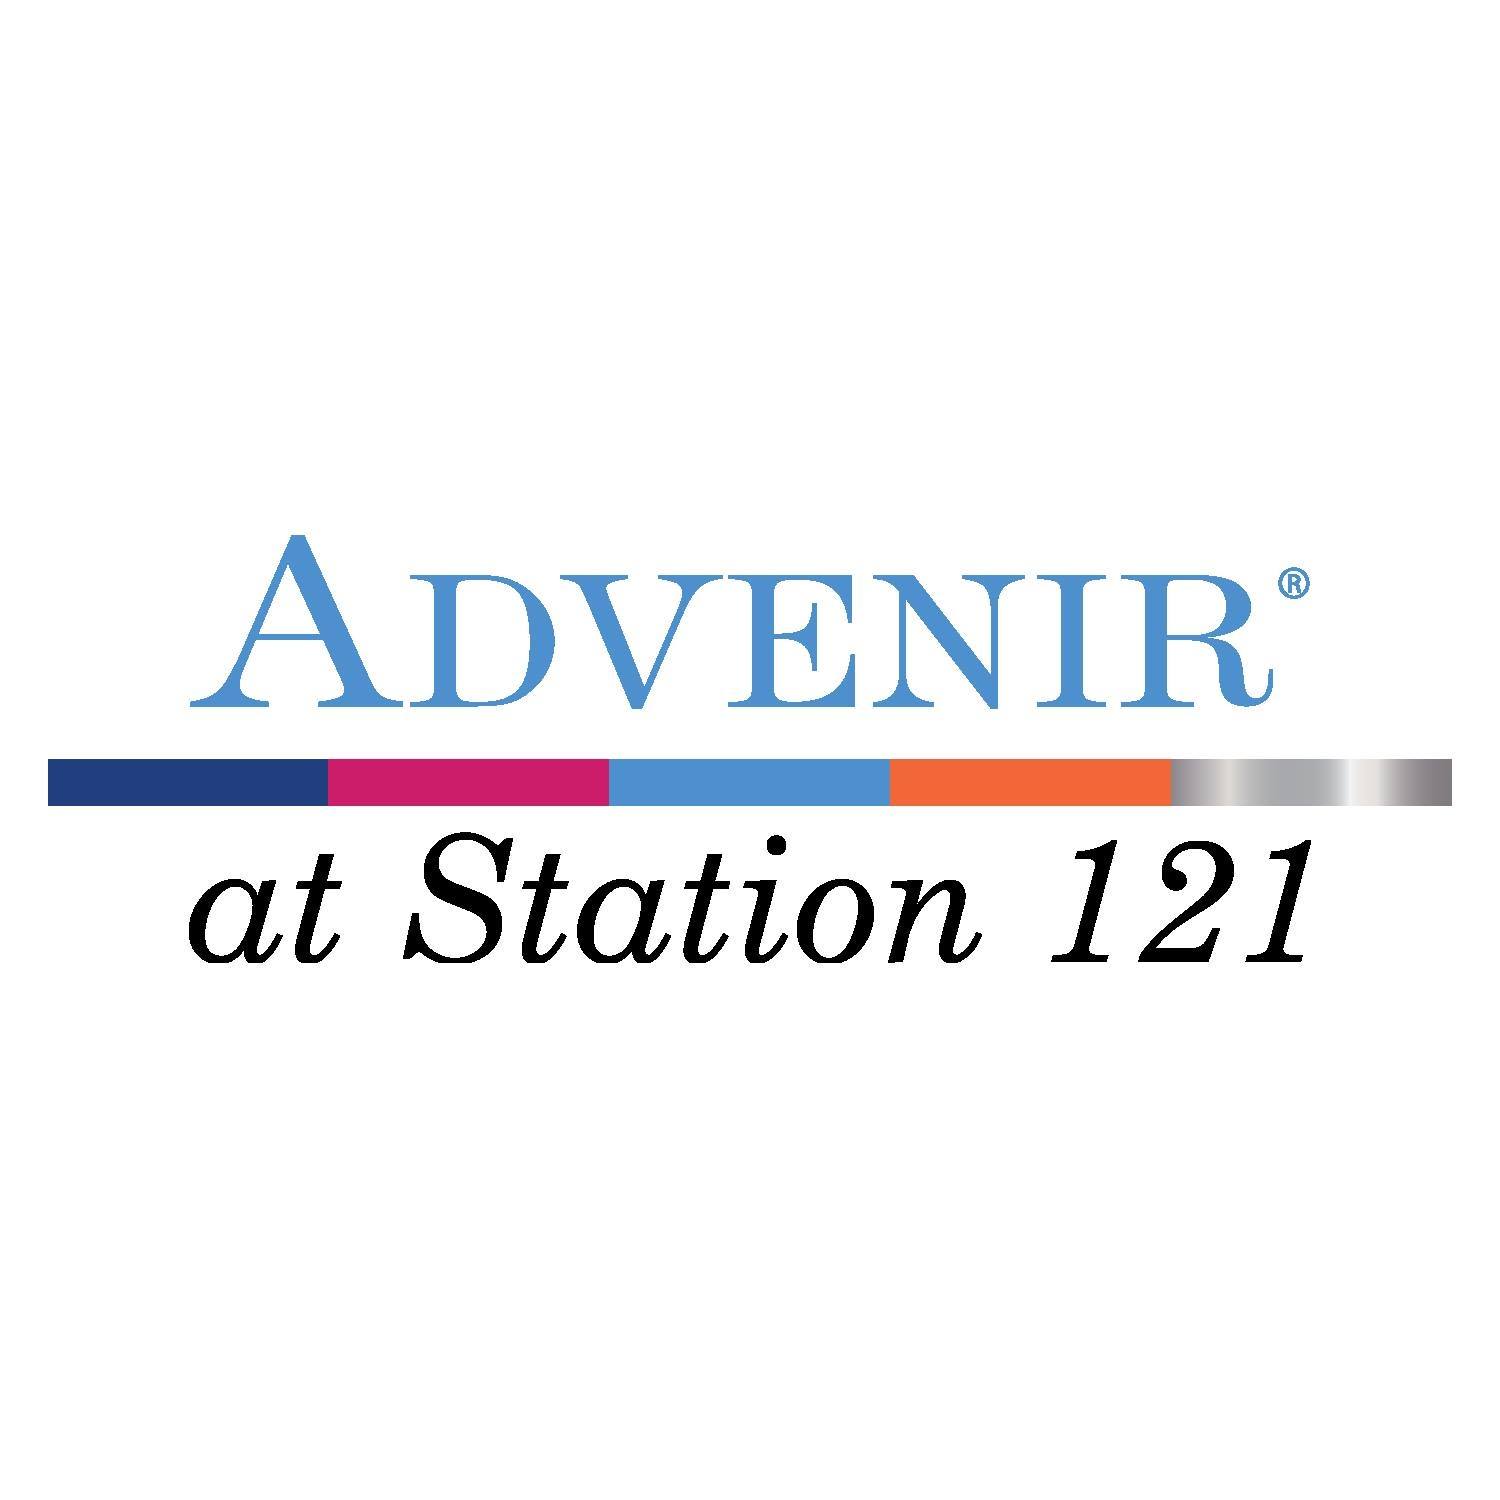 Advenir at Station 121